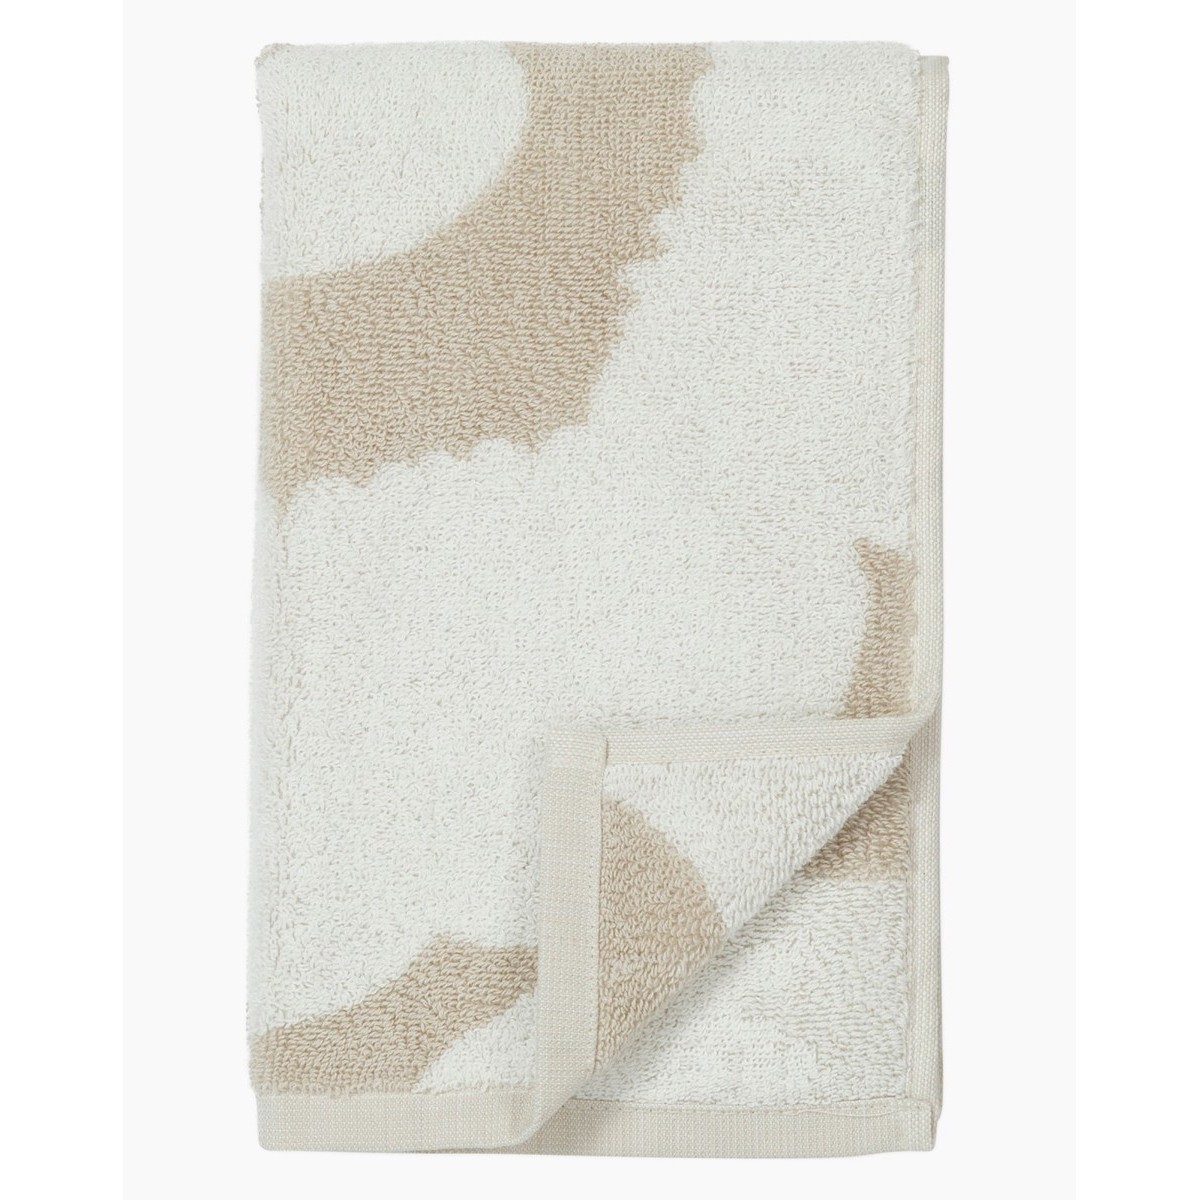 30x50cm - Unikko 810 - Marimekko guest towel